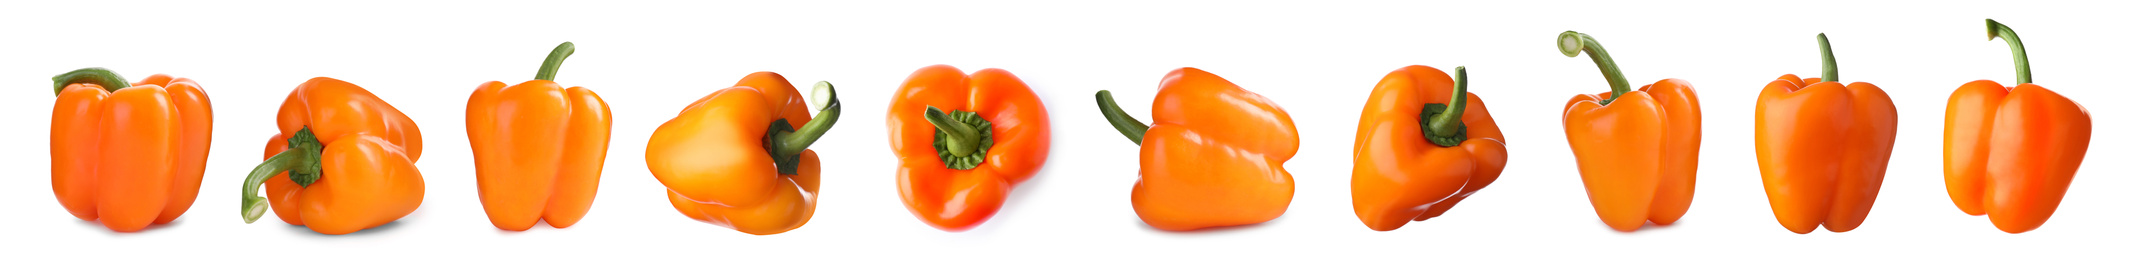 Image of Set of ripe orange bell peppers on white background. Banner design